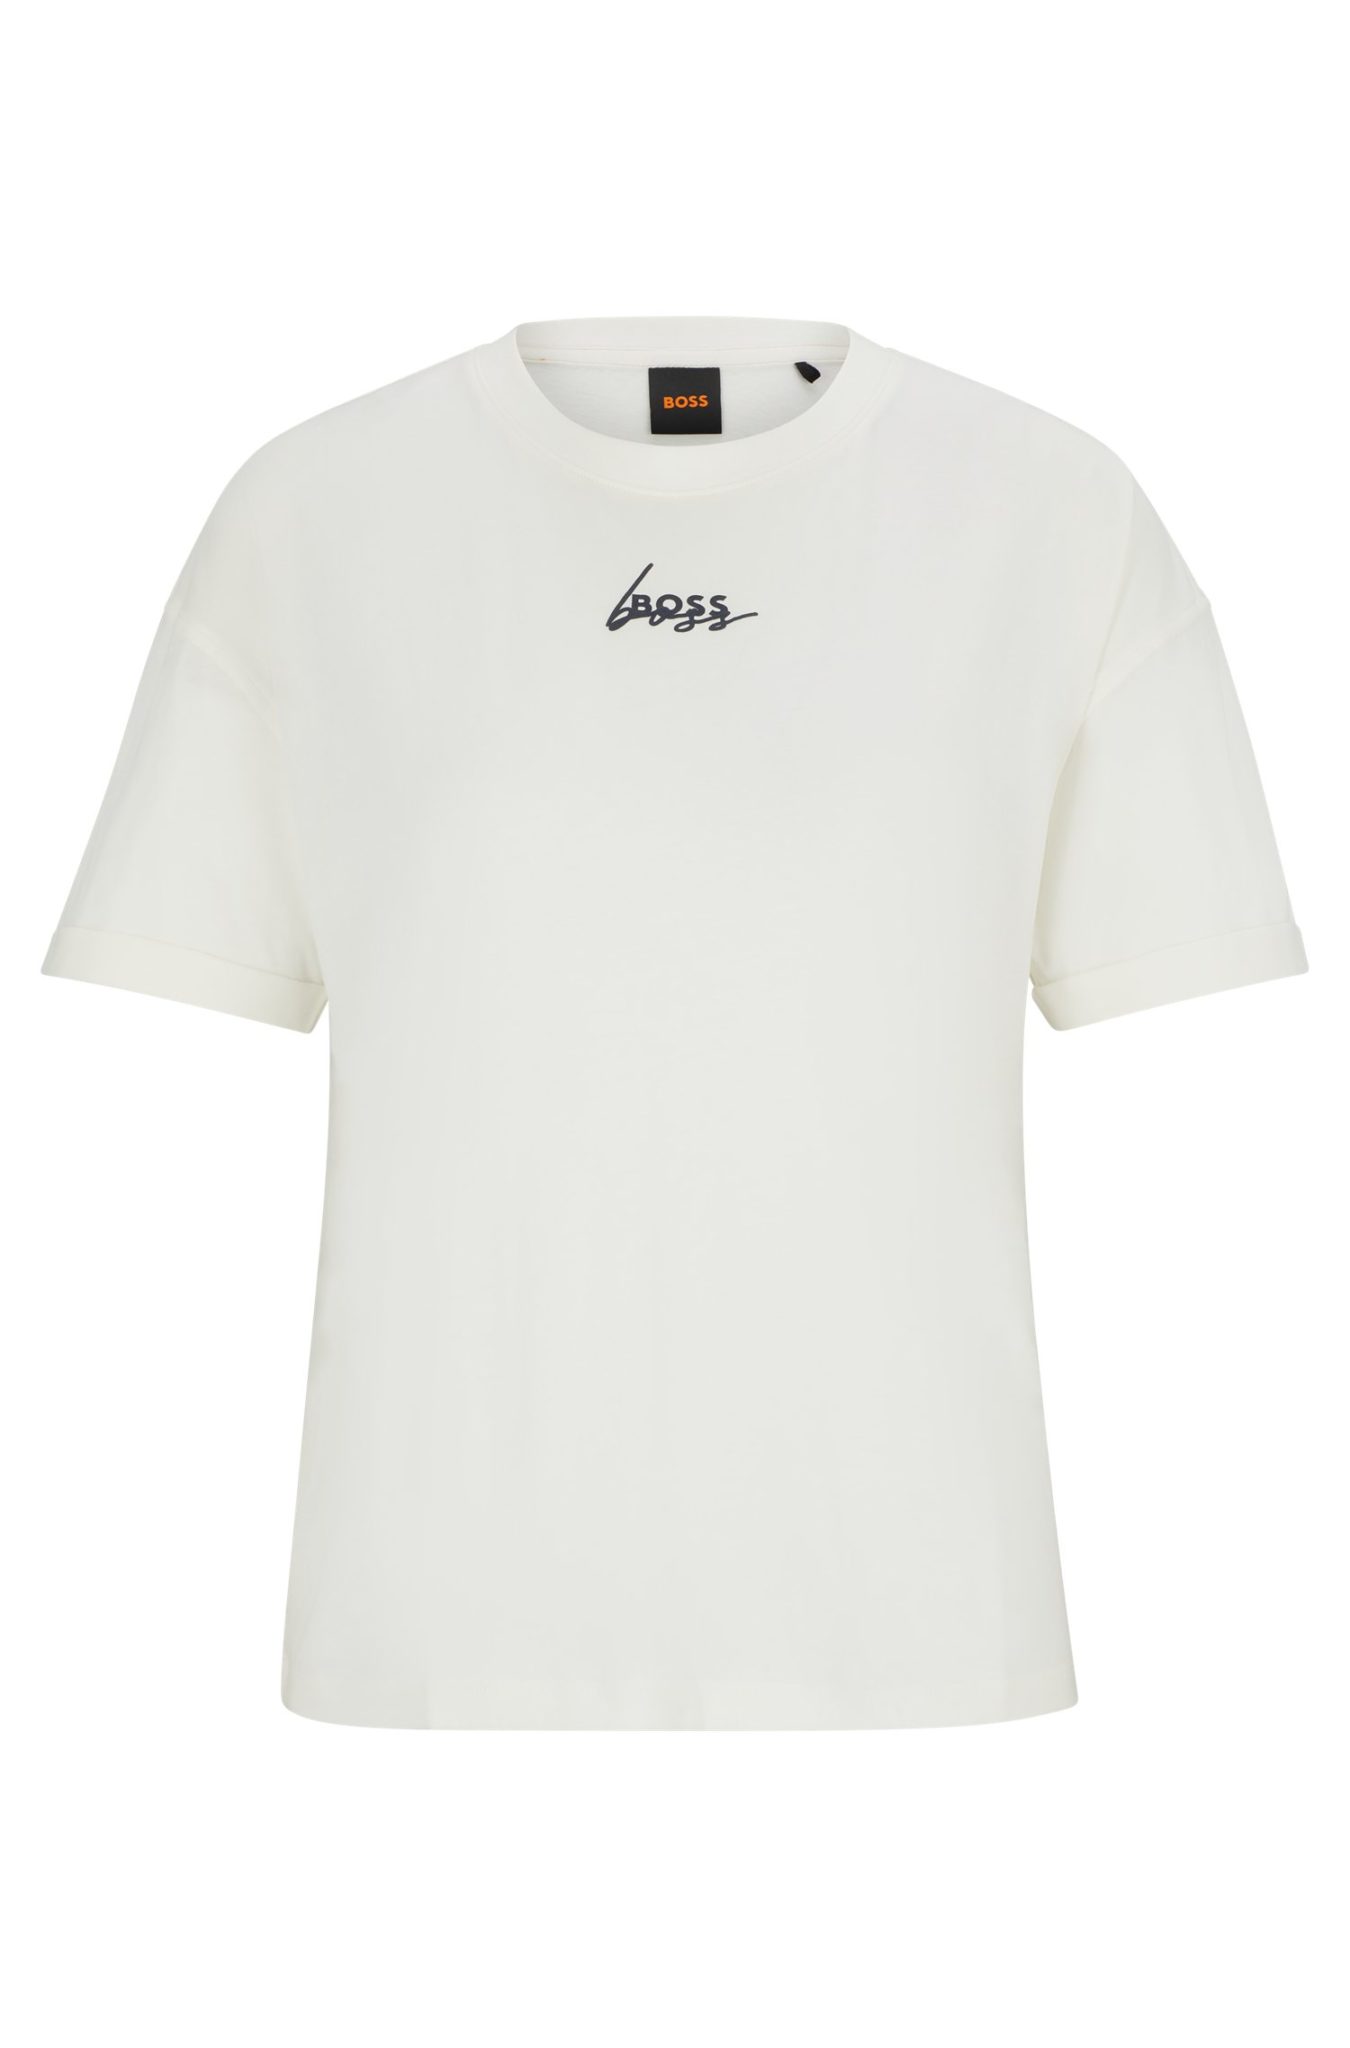 Hugo Boss T-shirt en jersey de coton avec imprimé emblématique